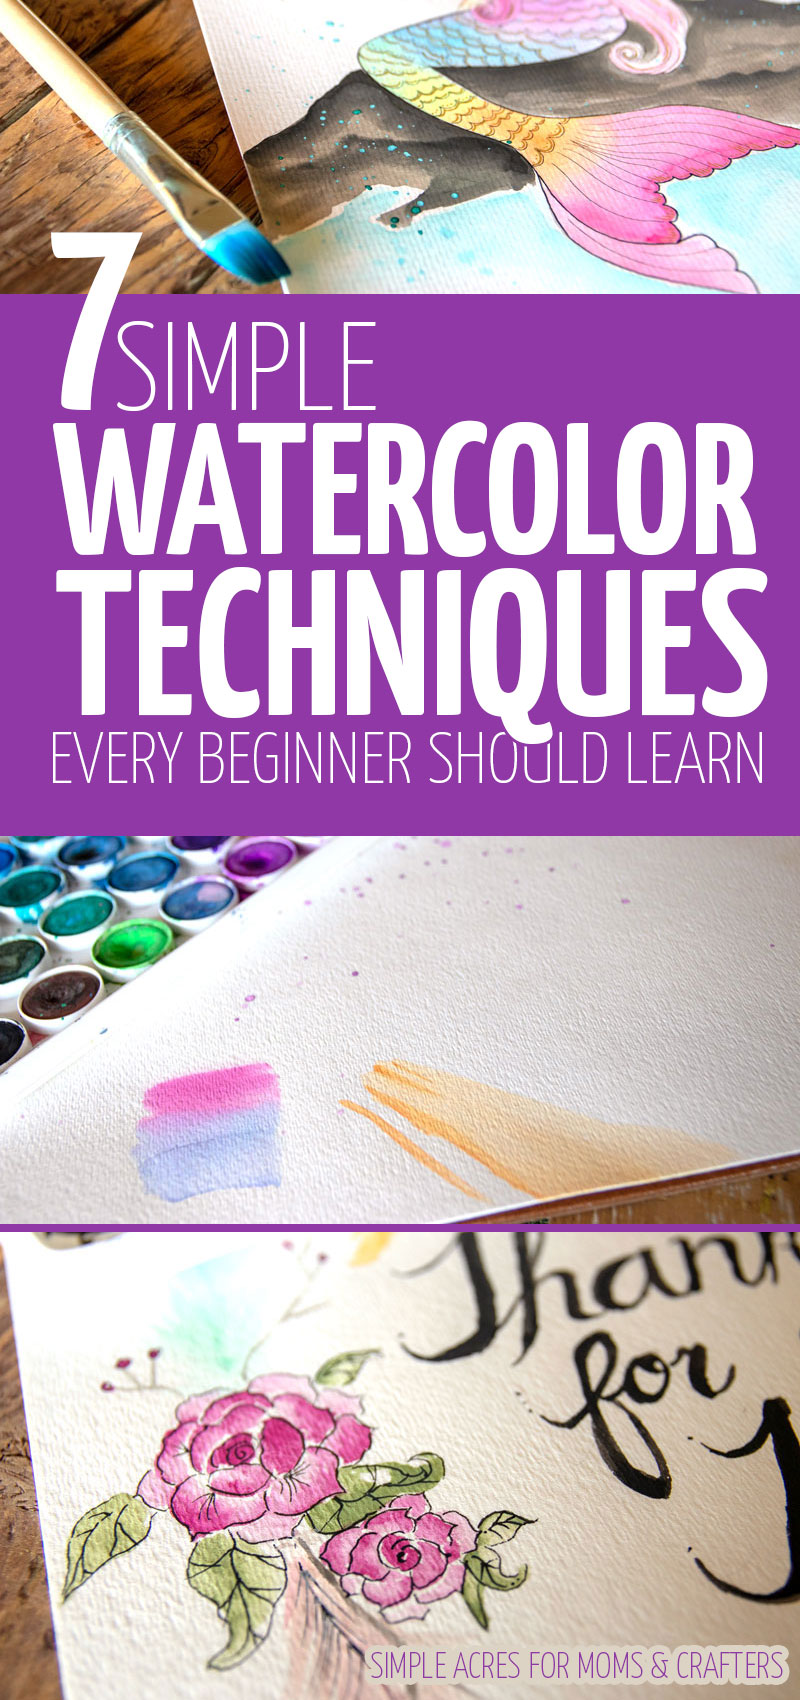 Easy Watercolor Tutorials for Beginners - THAT ART TEACHER